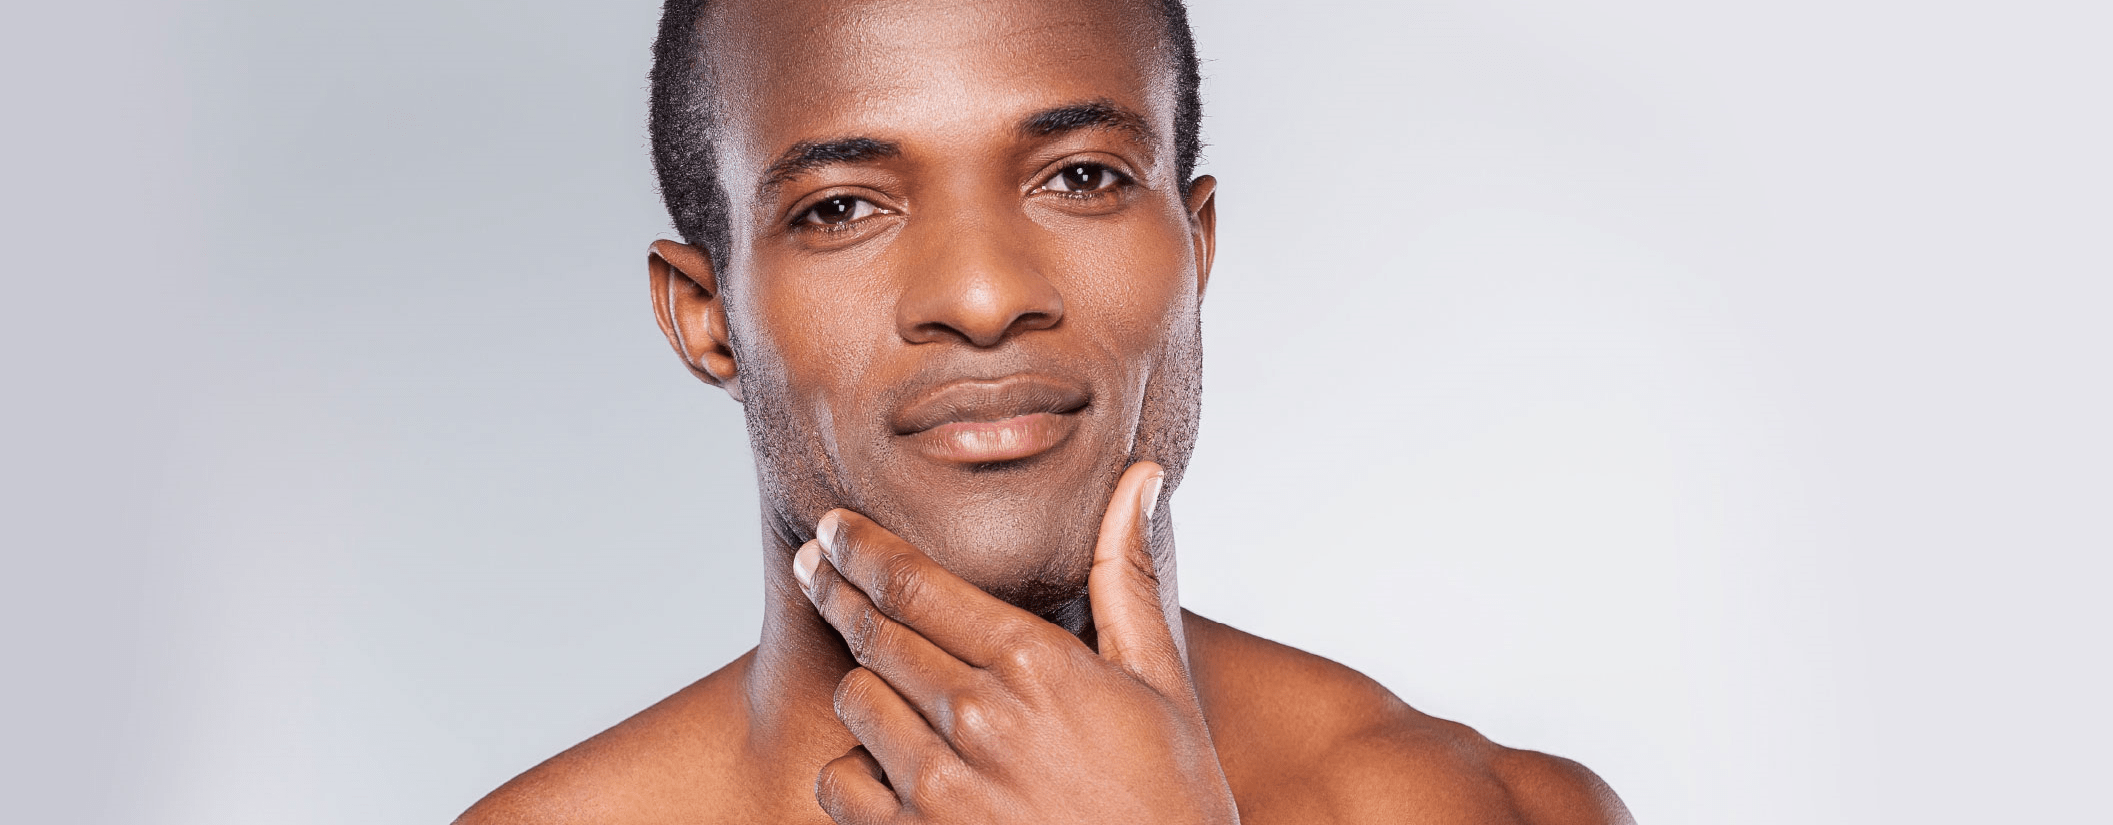 Treating oily skin